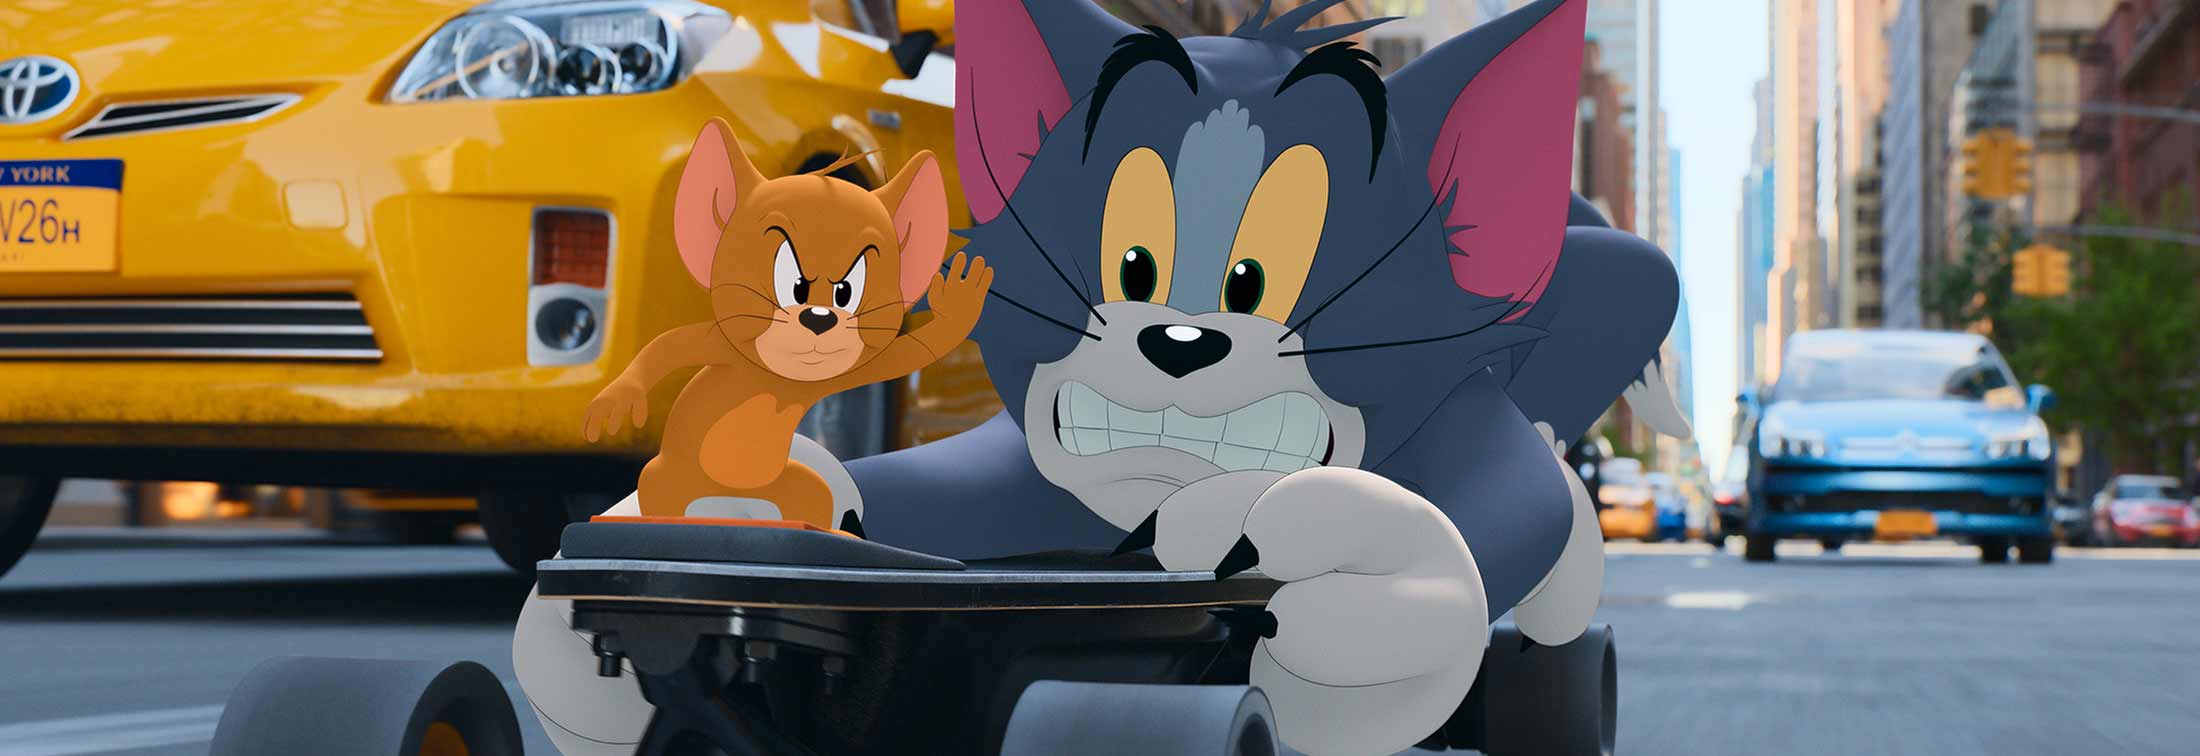 Tom & Jerry - A spiritless reimagining of a classic cartoon